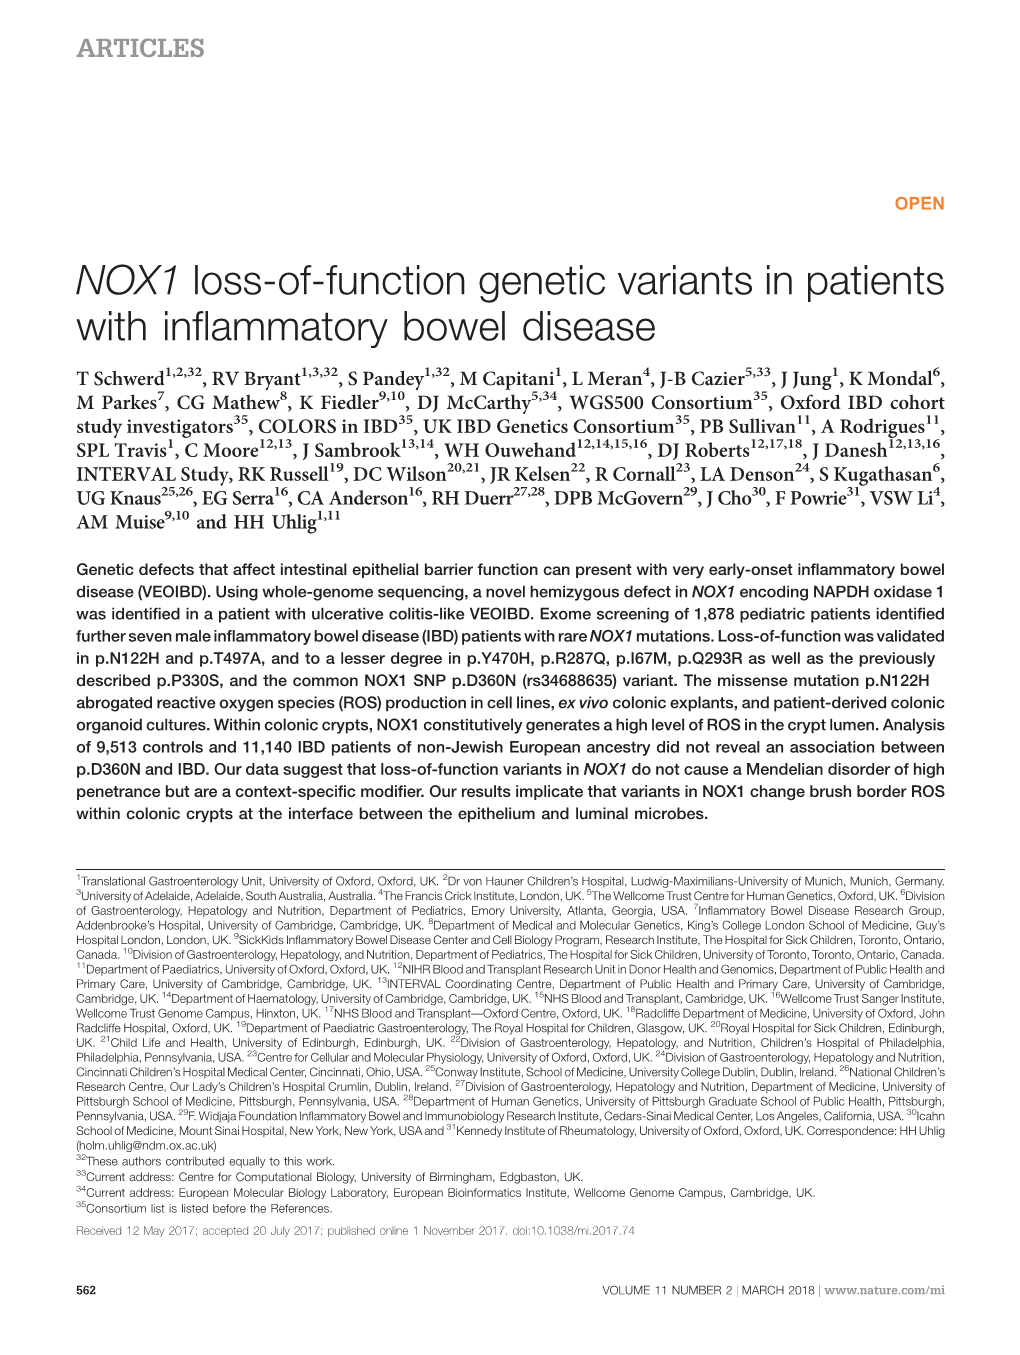 NOX1 Loss-Of-Function Genetic Variants in Patients with Inflammatory Bowel Disease